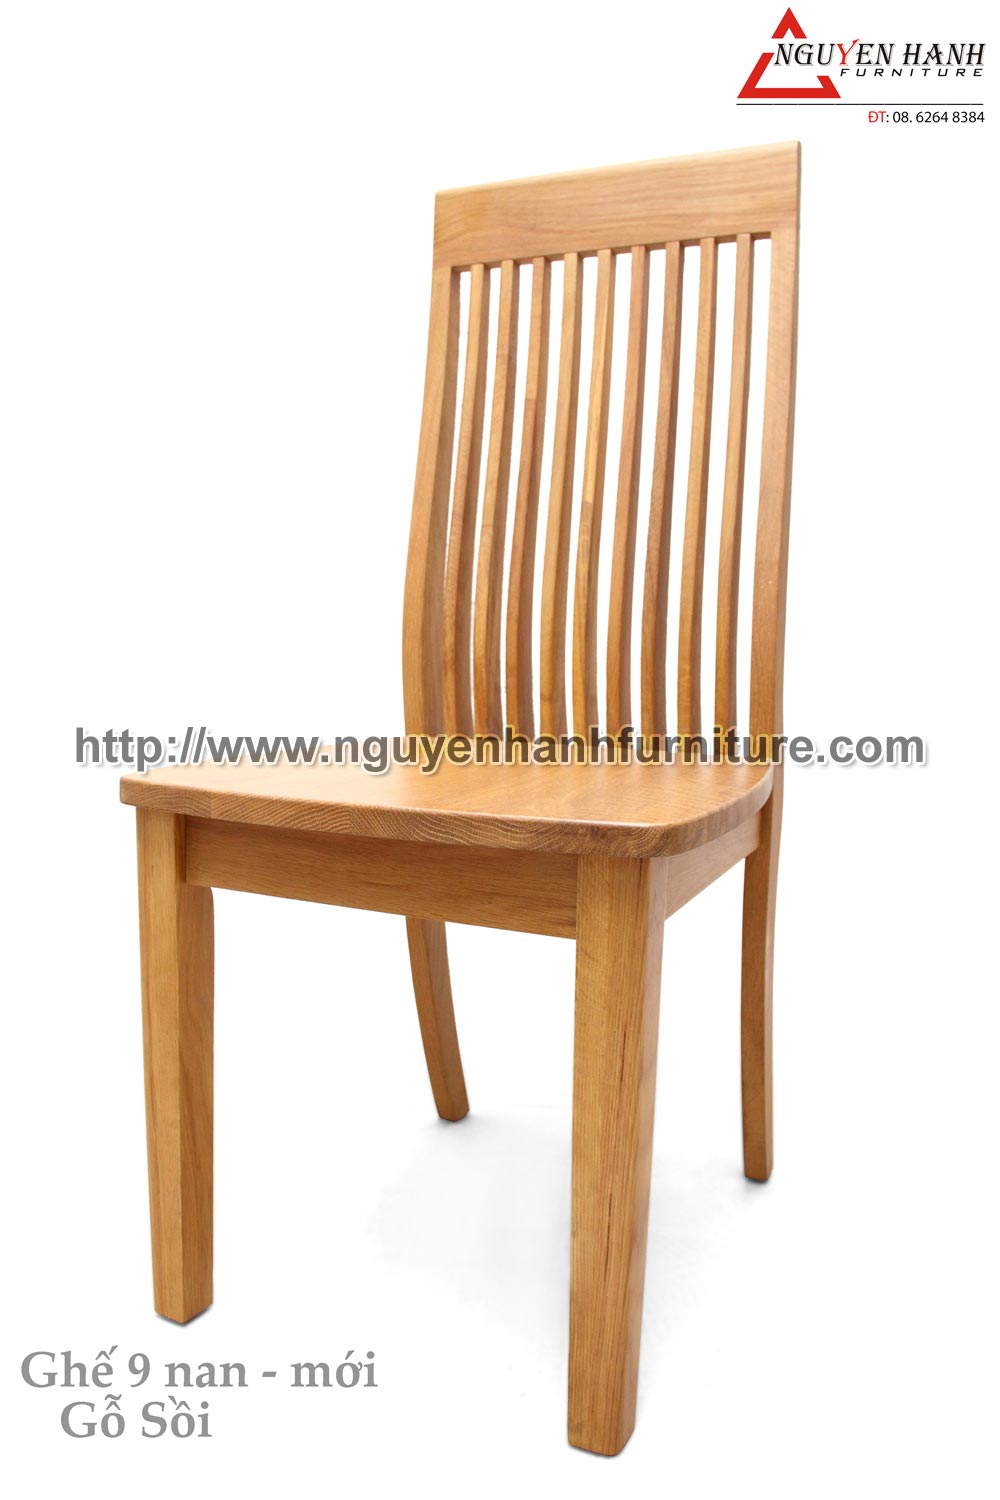 Name product: 9 blade chair of American Oak tree wood